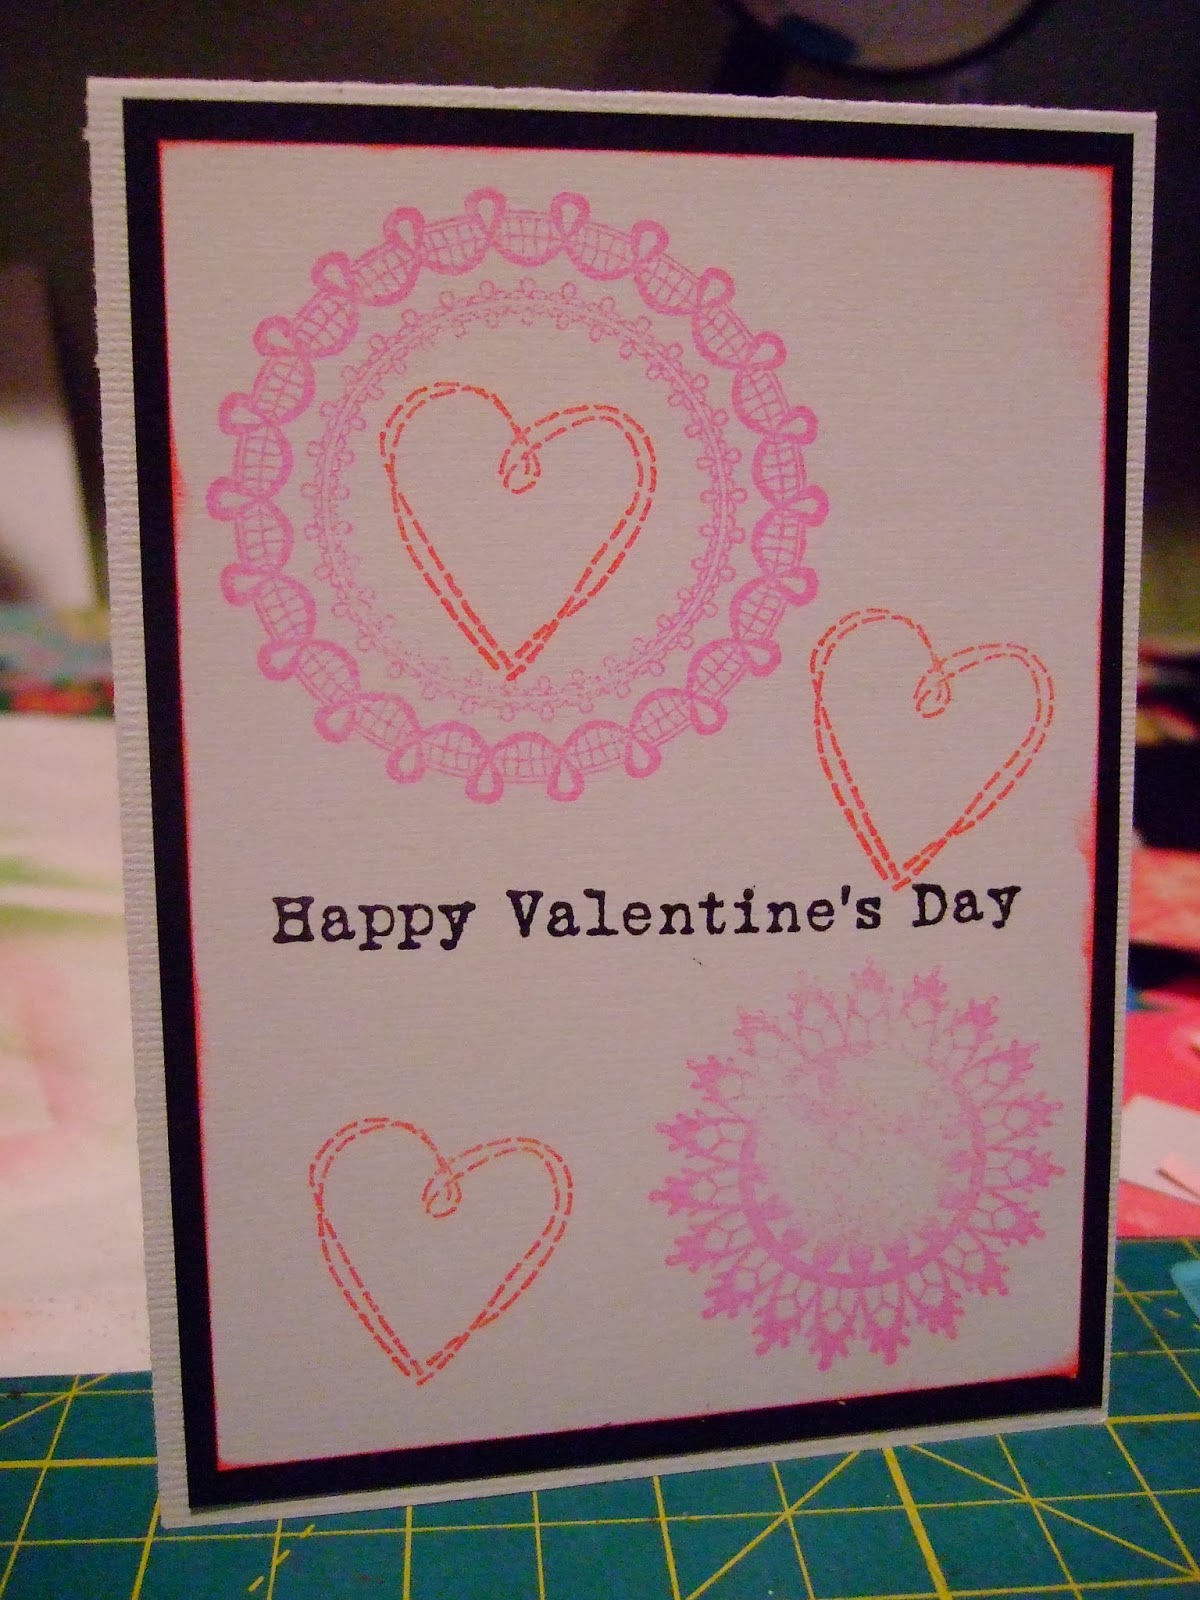 jen-s-creative-side-st-valentine-s-day-card